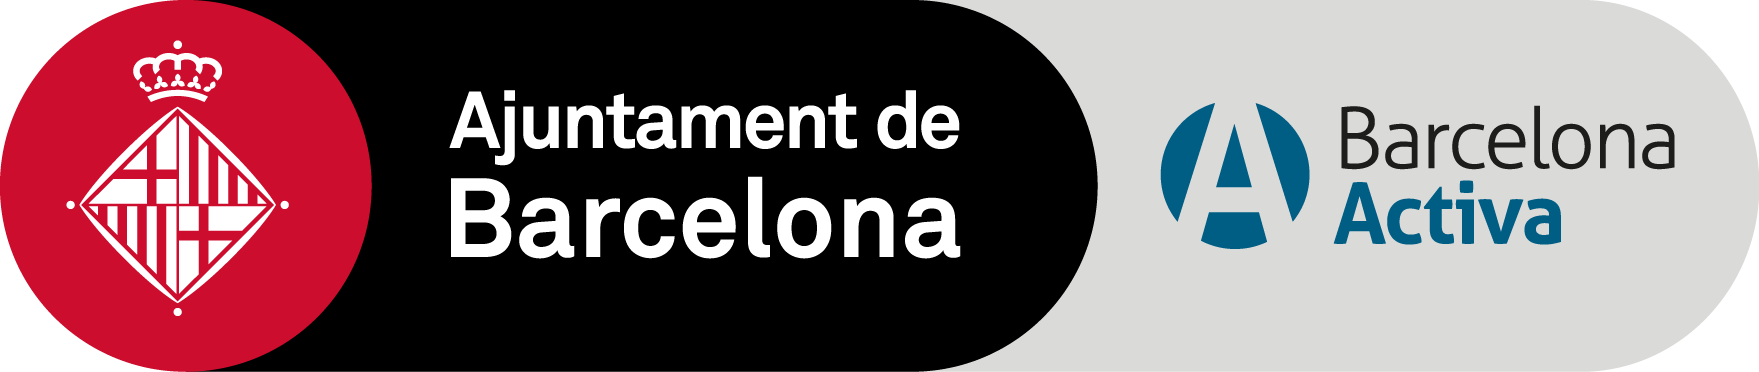 Ajuntament de Barcelona / Barcelona Activa